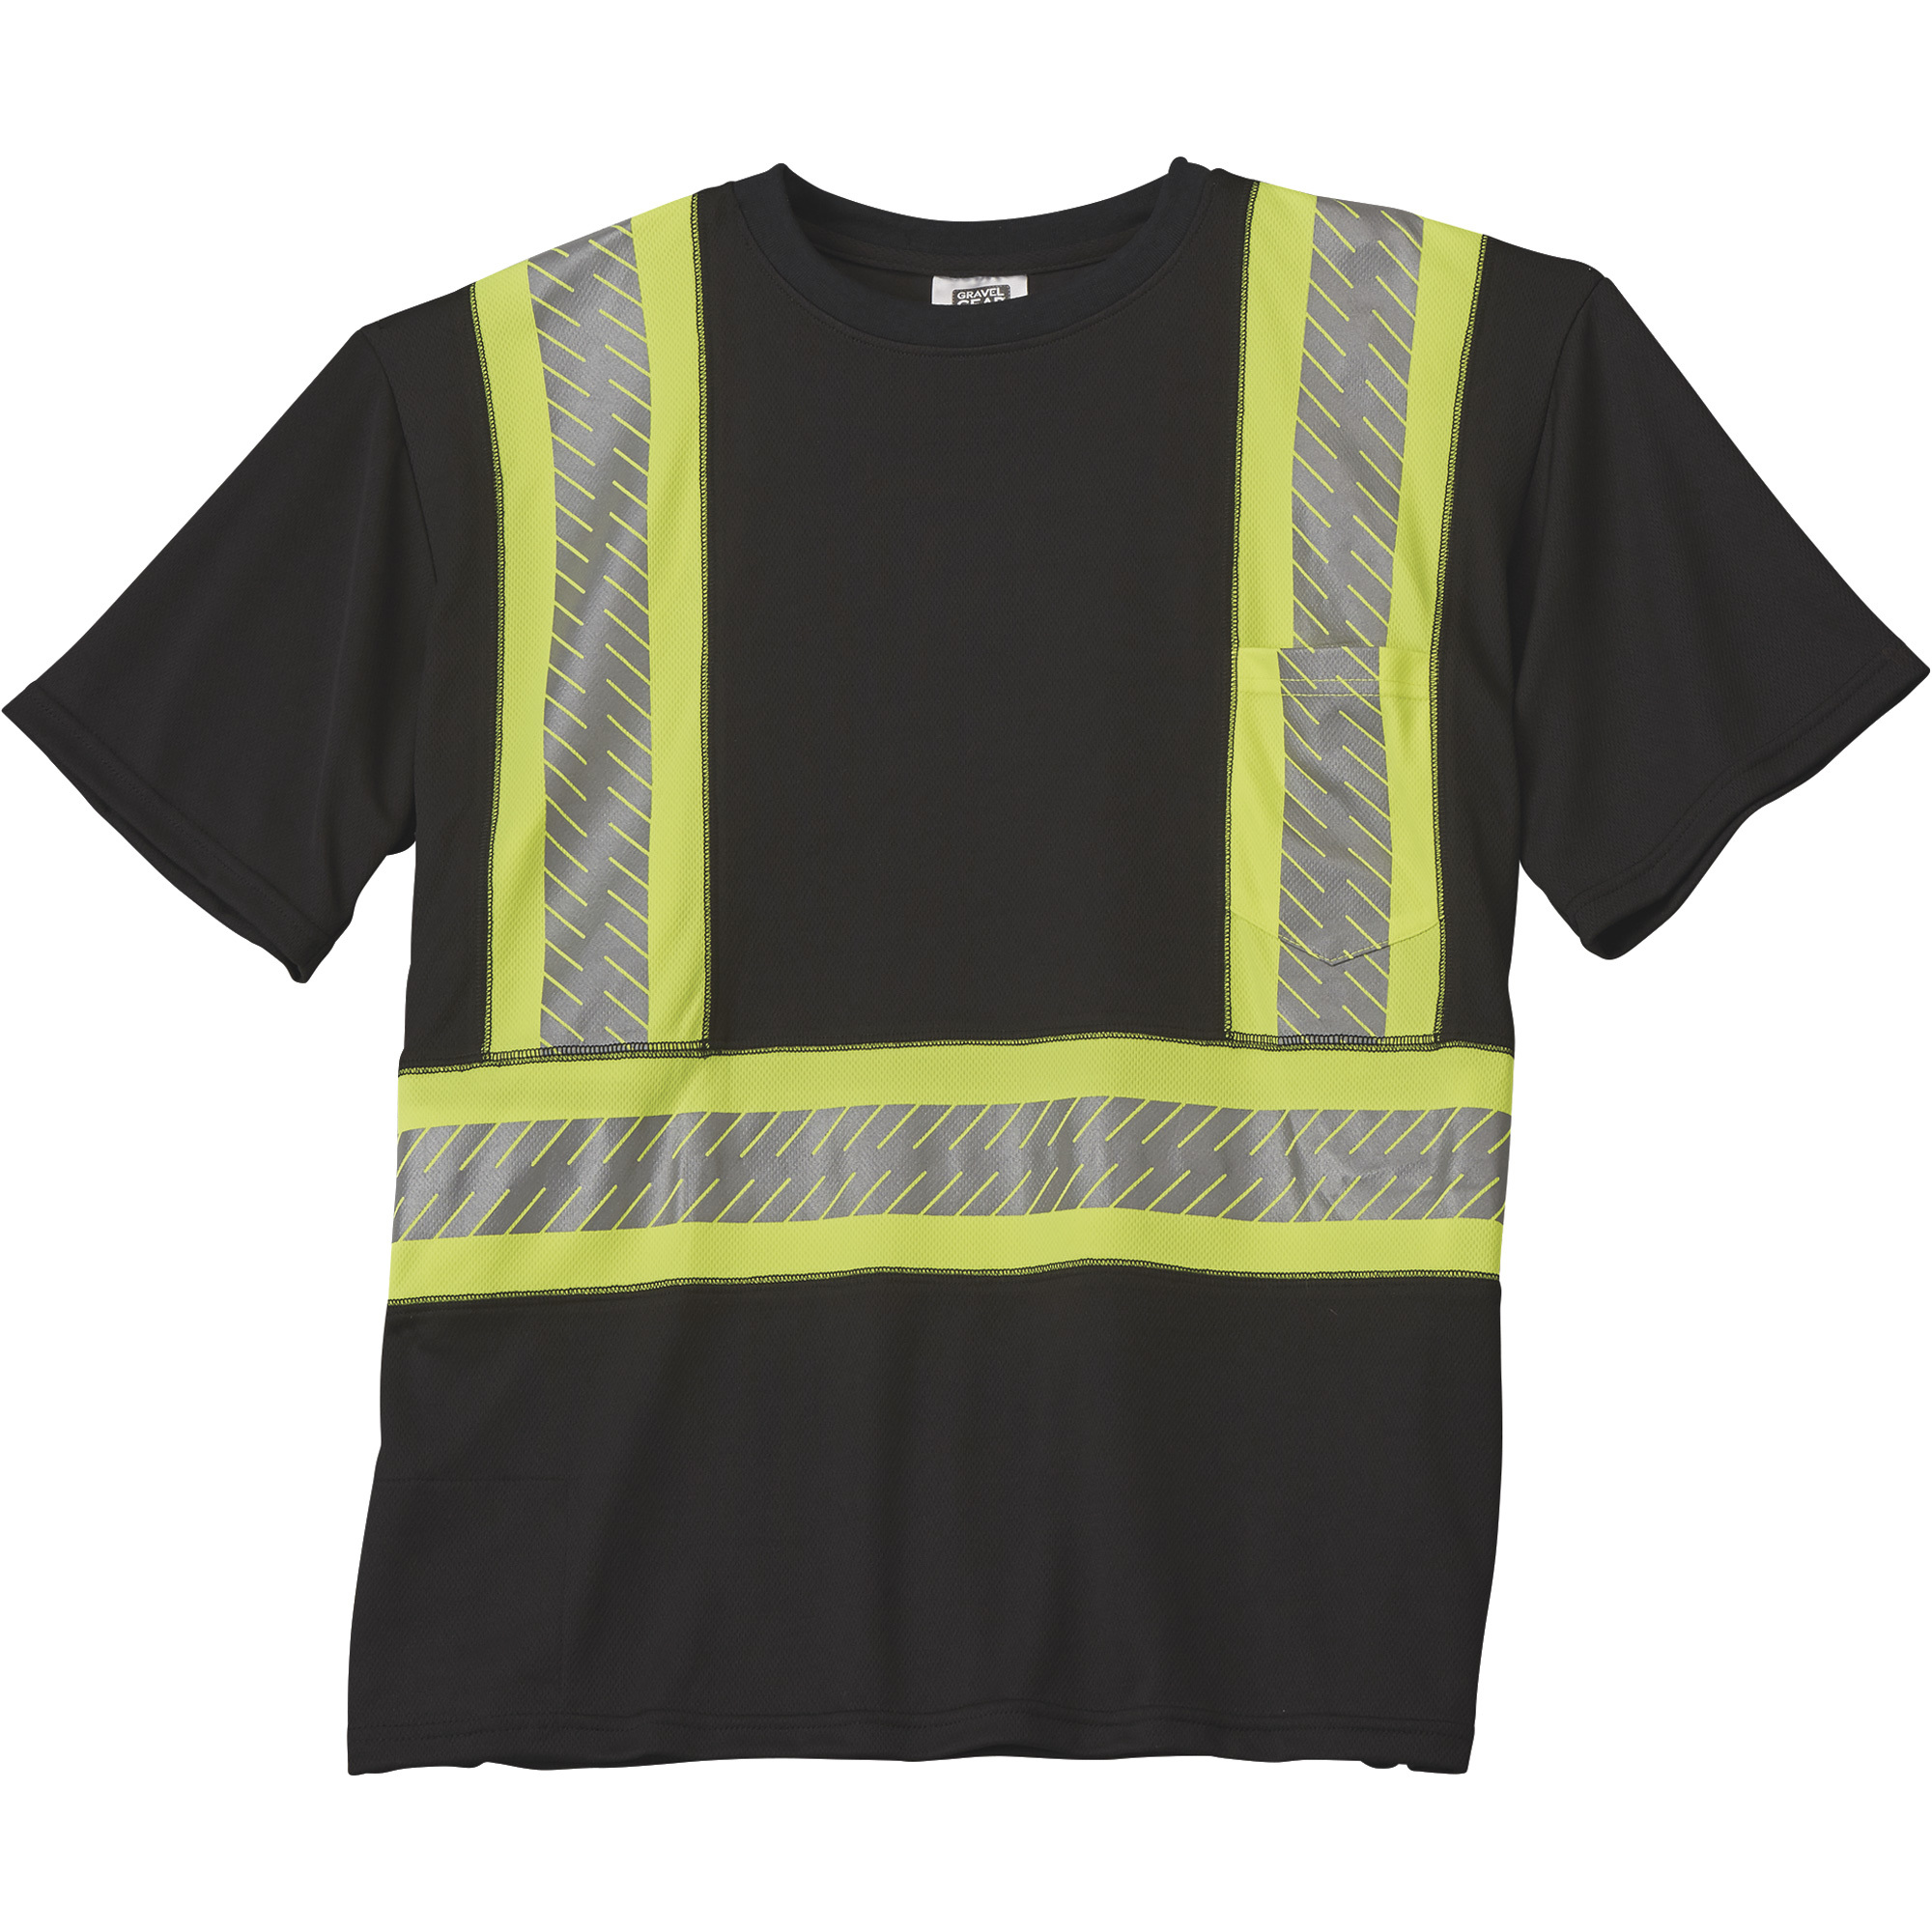 Gravel Gear Menâs Class 1 Short Sleeve T-Shirt â Black/Lime, Large